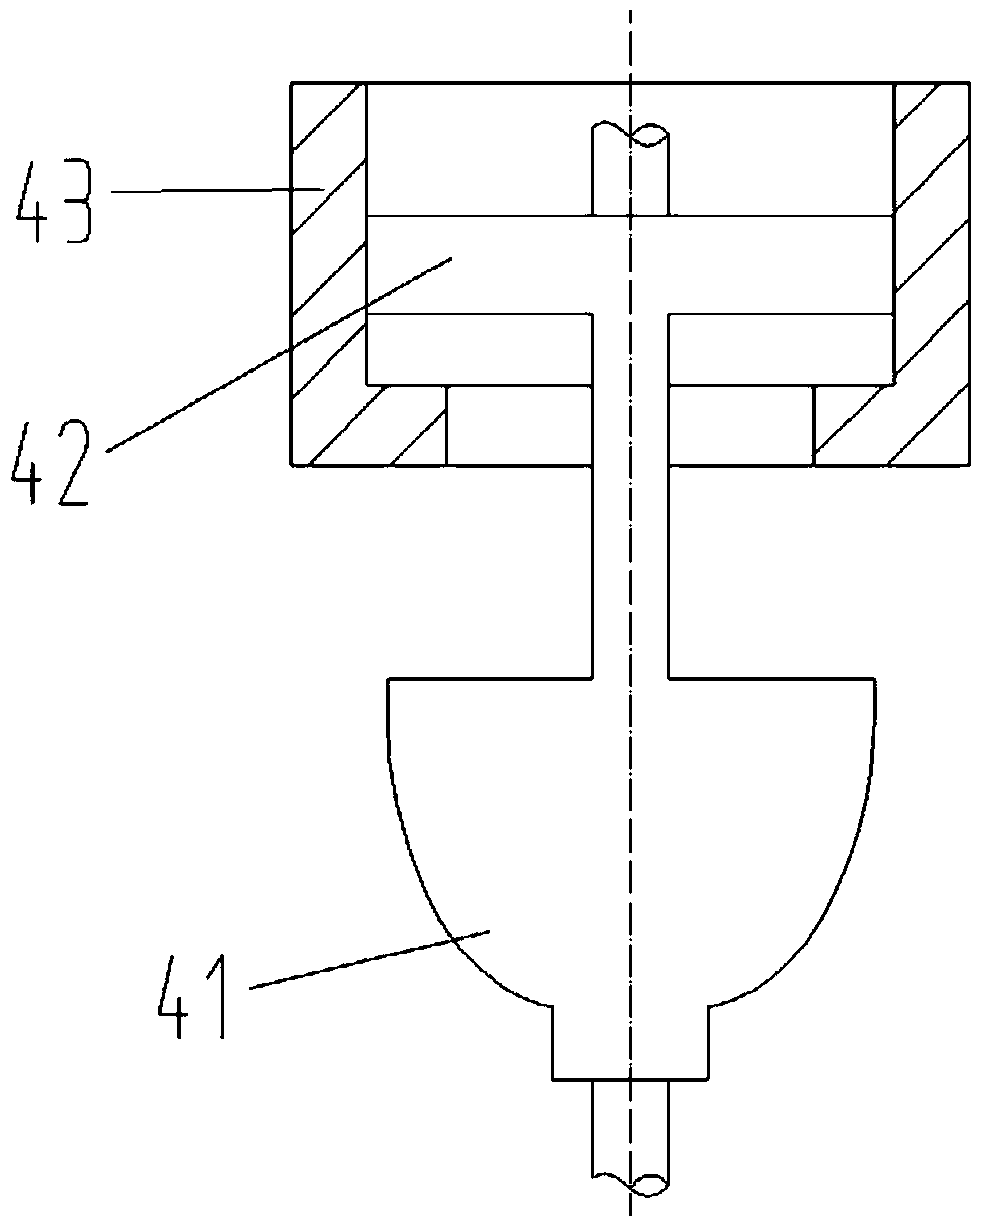 Large-caliber high-pressure pressure regulating valve for pneumatic test device